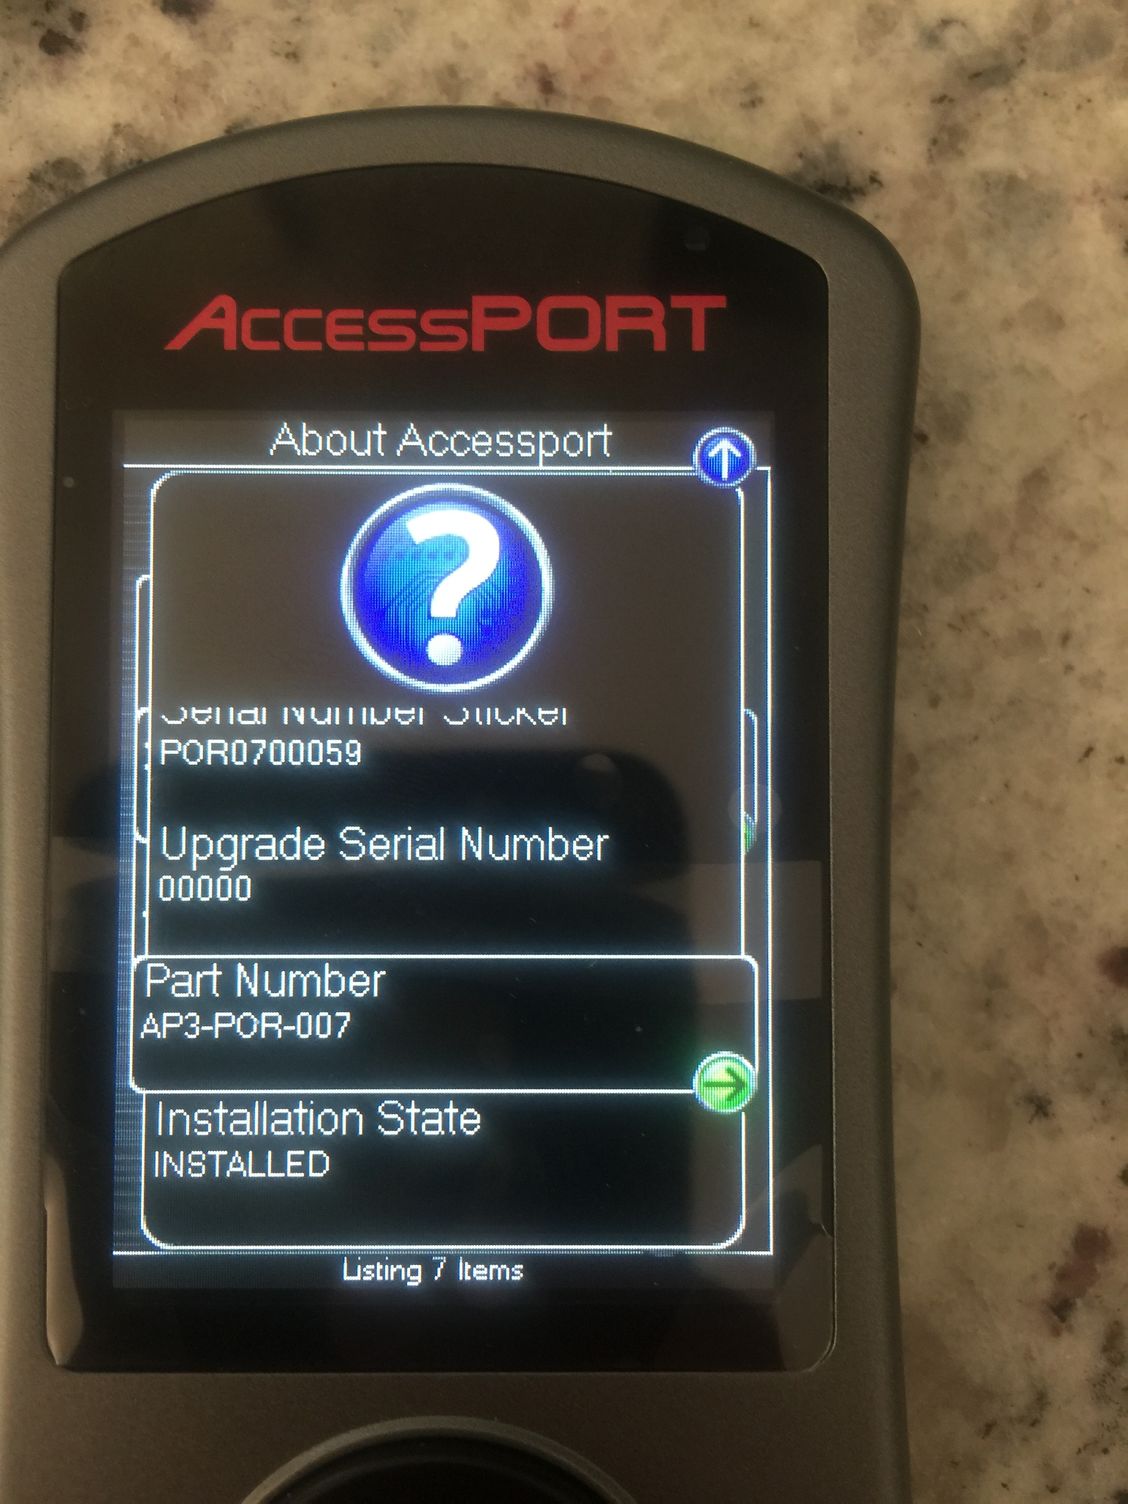 accessport serial number